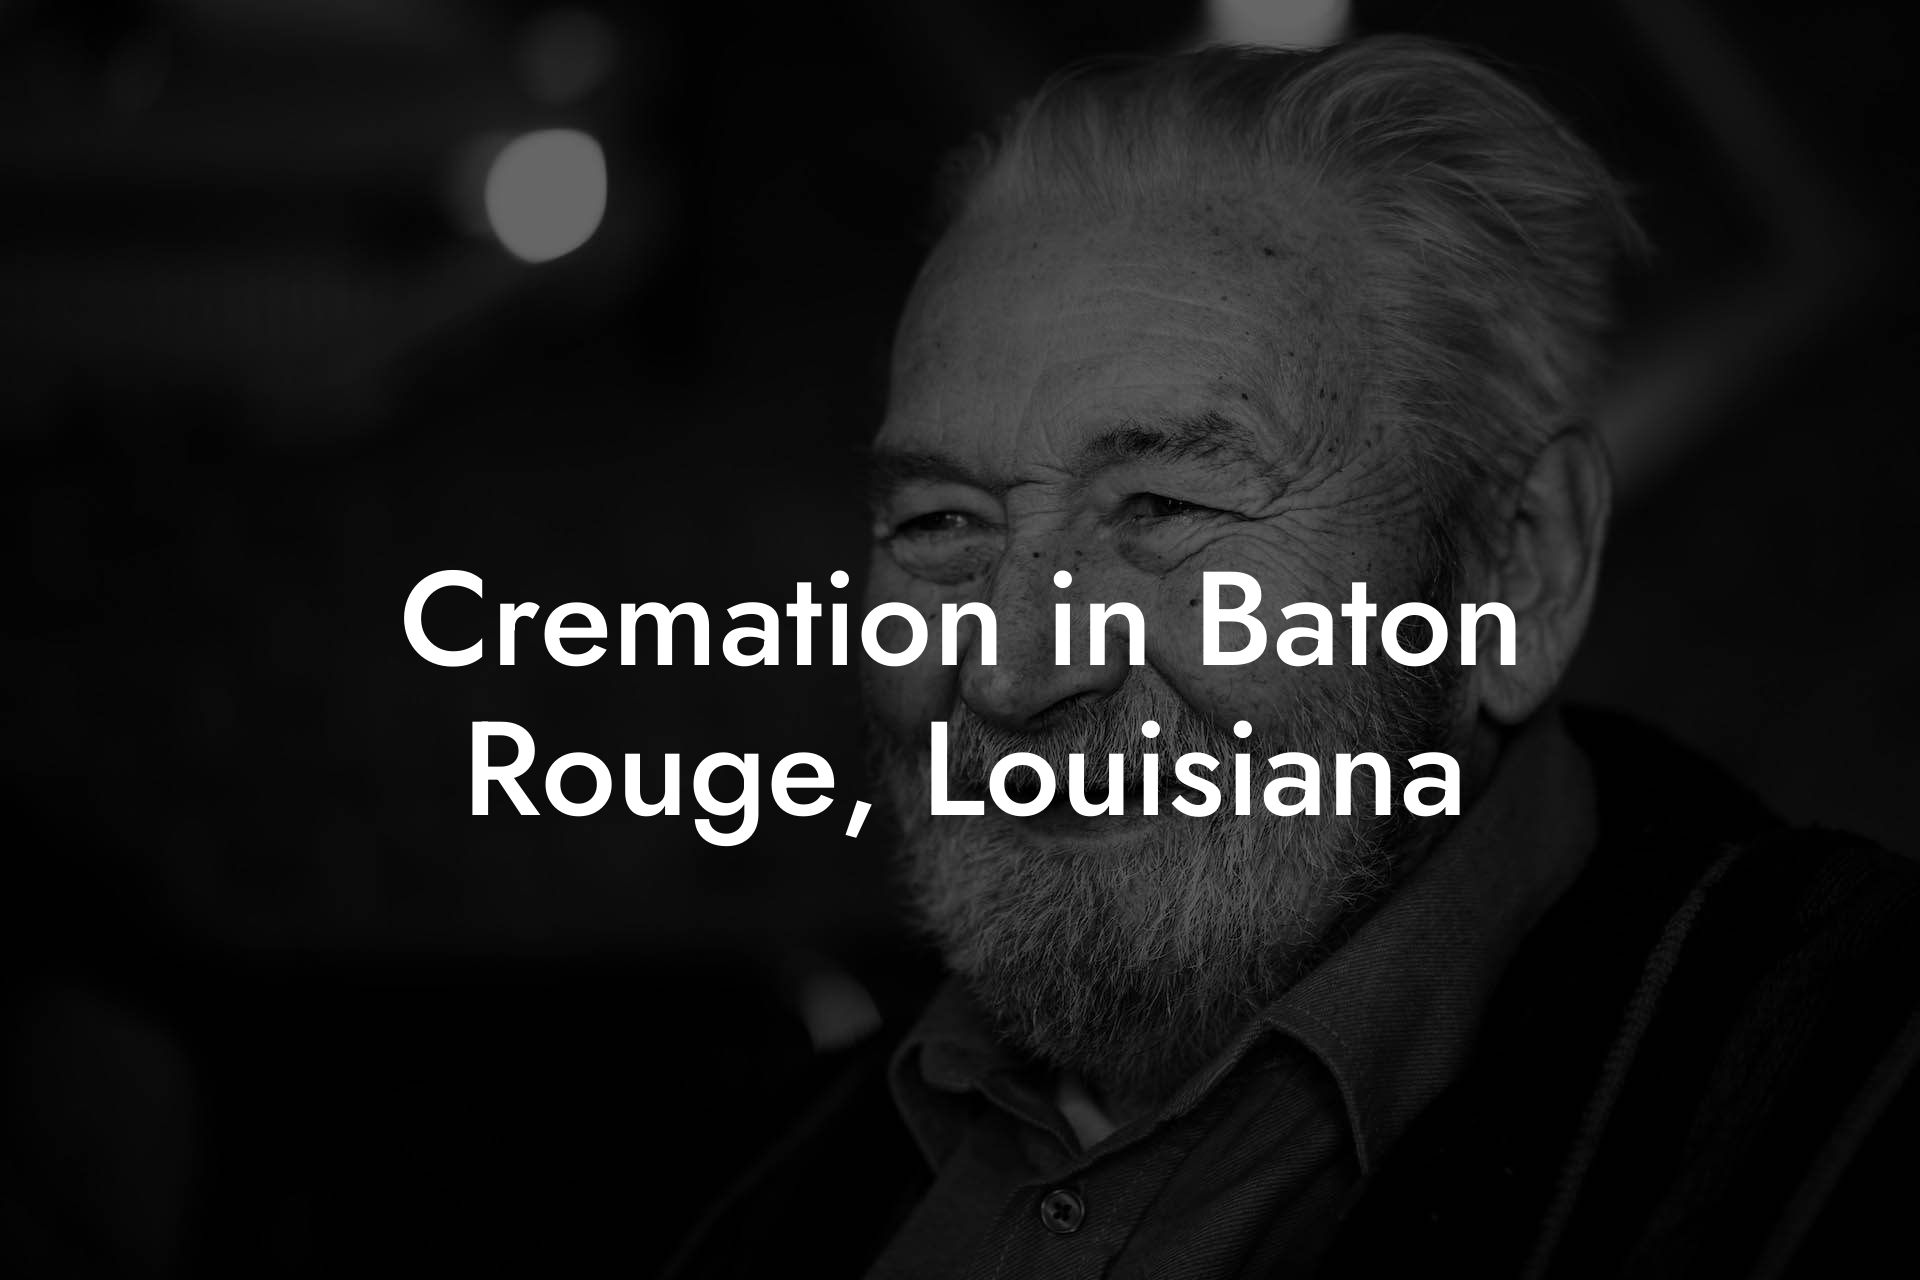 Cremation in Baton Rouge, Louisiana